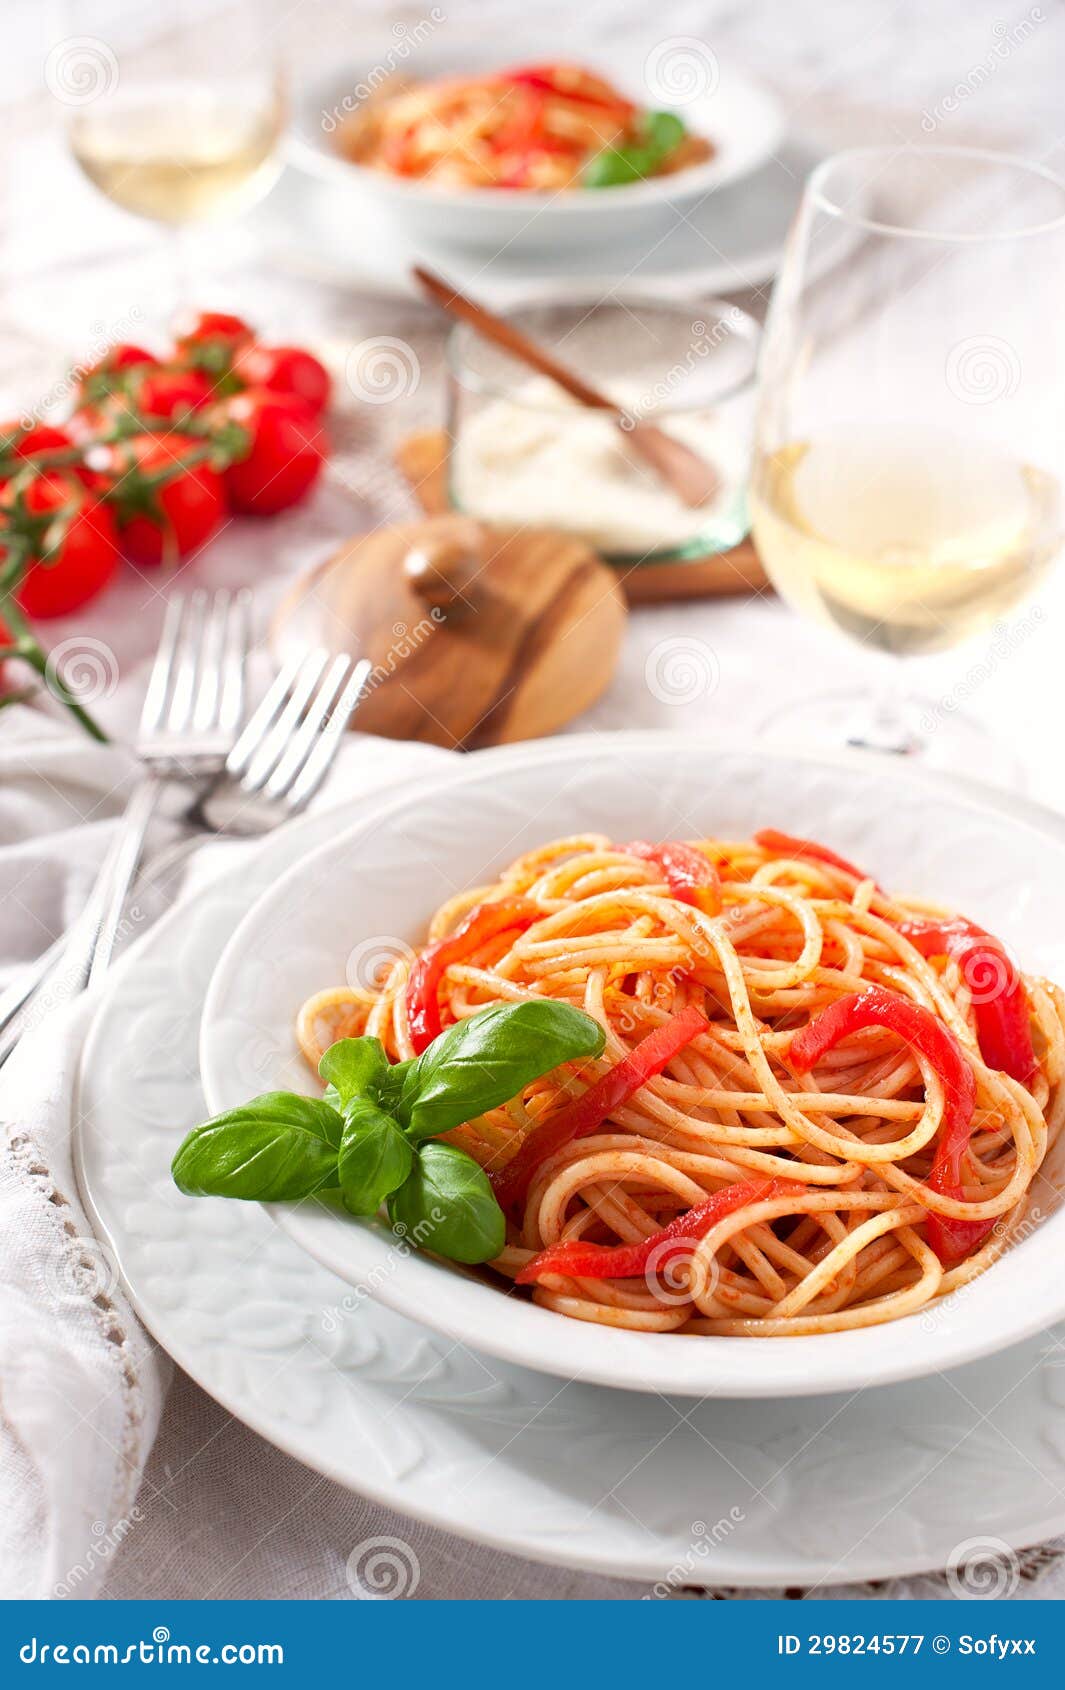 Italian Spaghetti Tomato Sauce and Basil Stock Image - Image of tomato ...